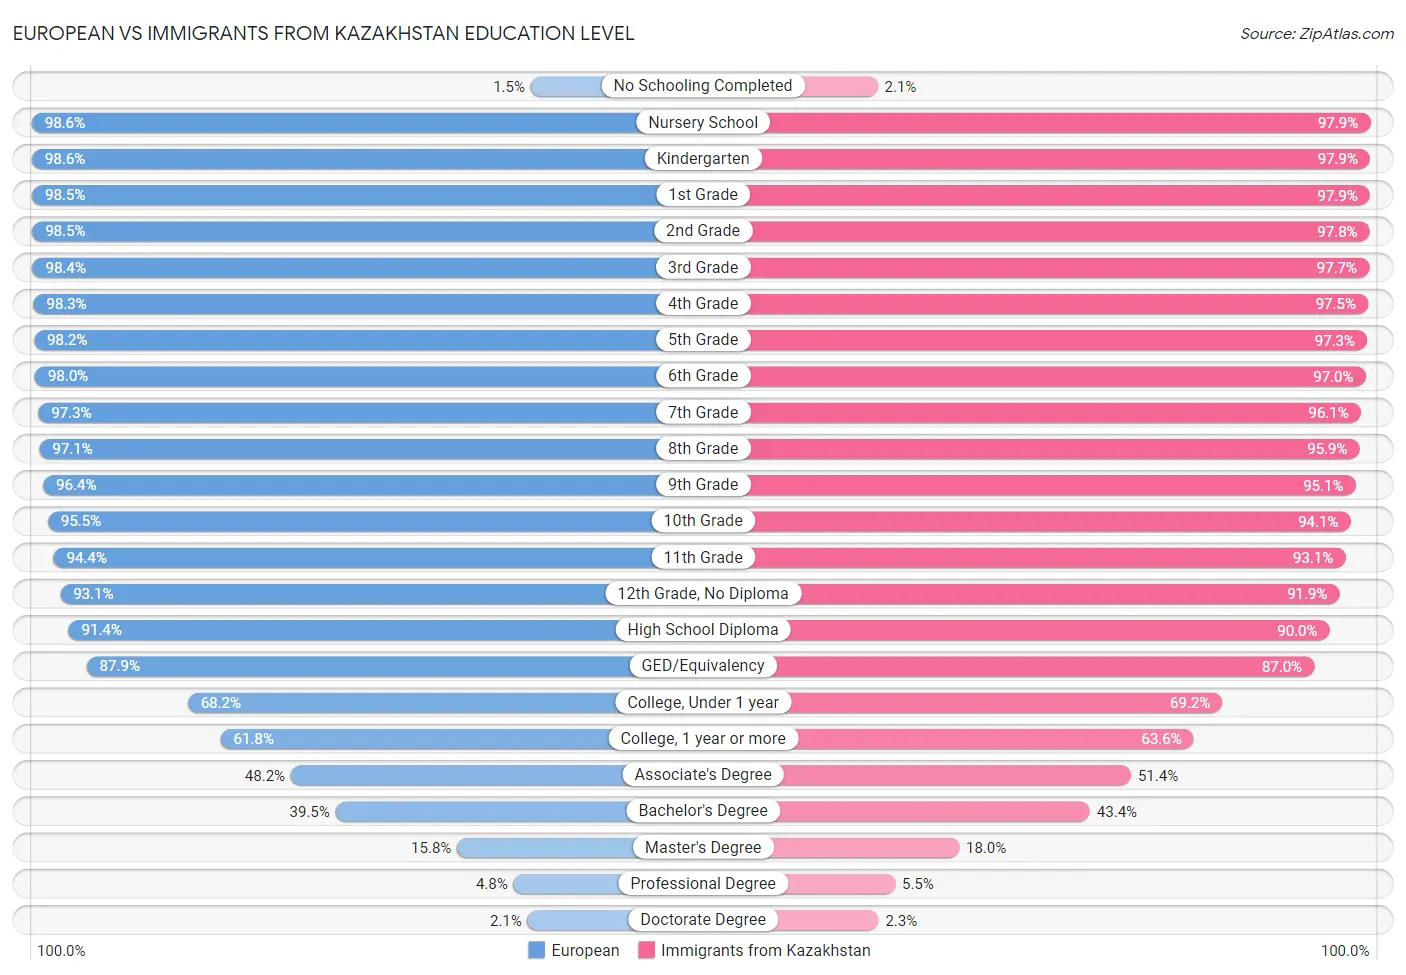 European vs Immigrants from Kazakhstan Education Level